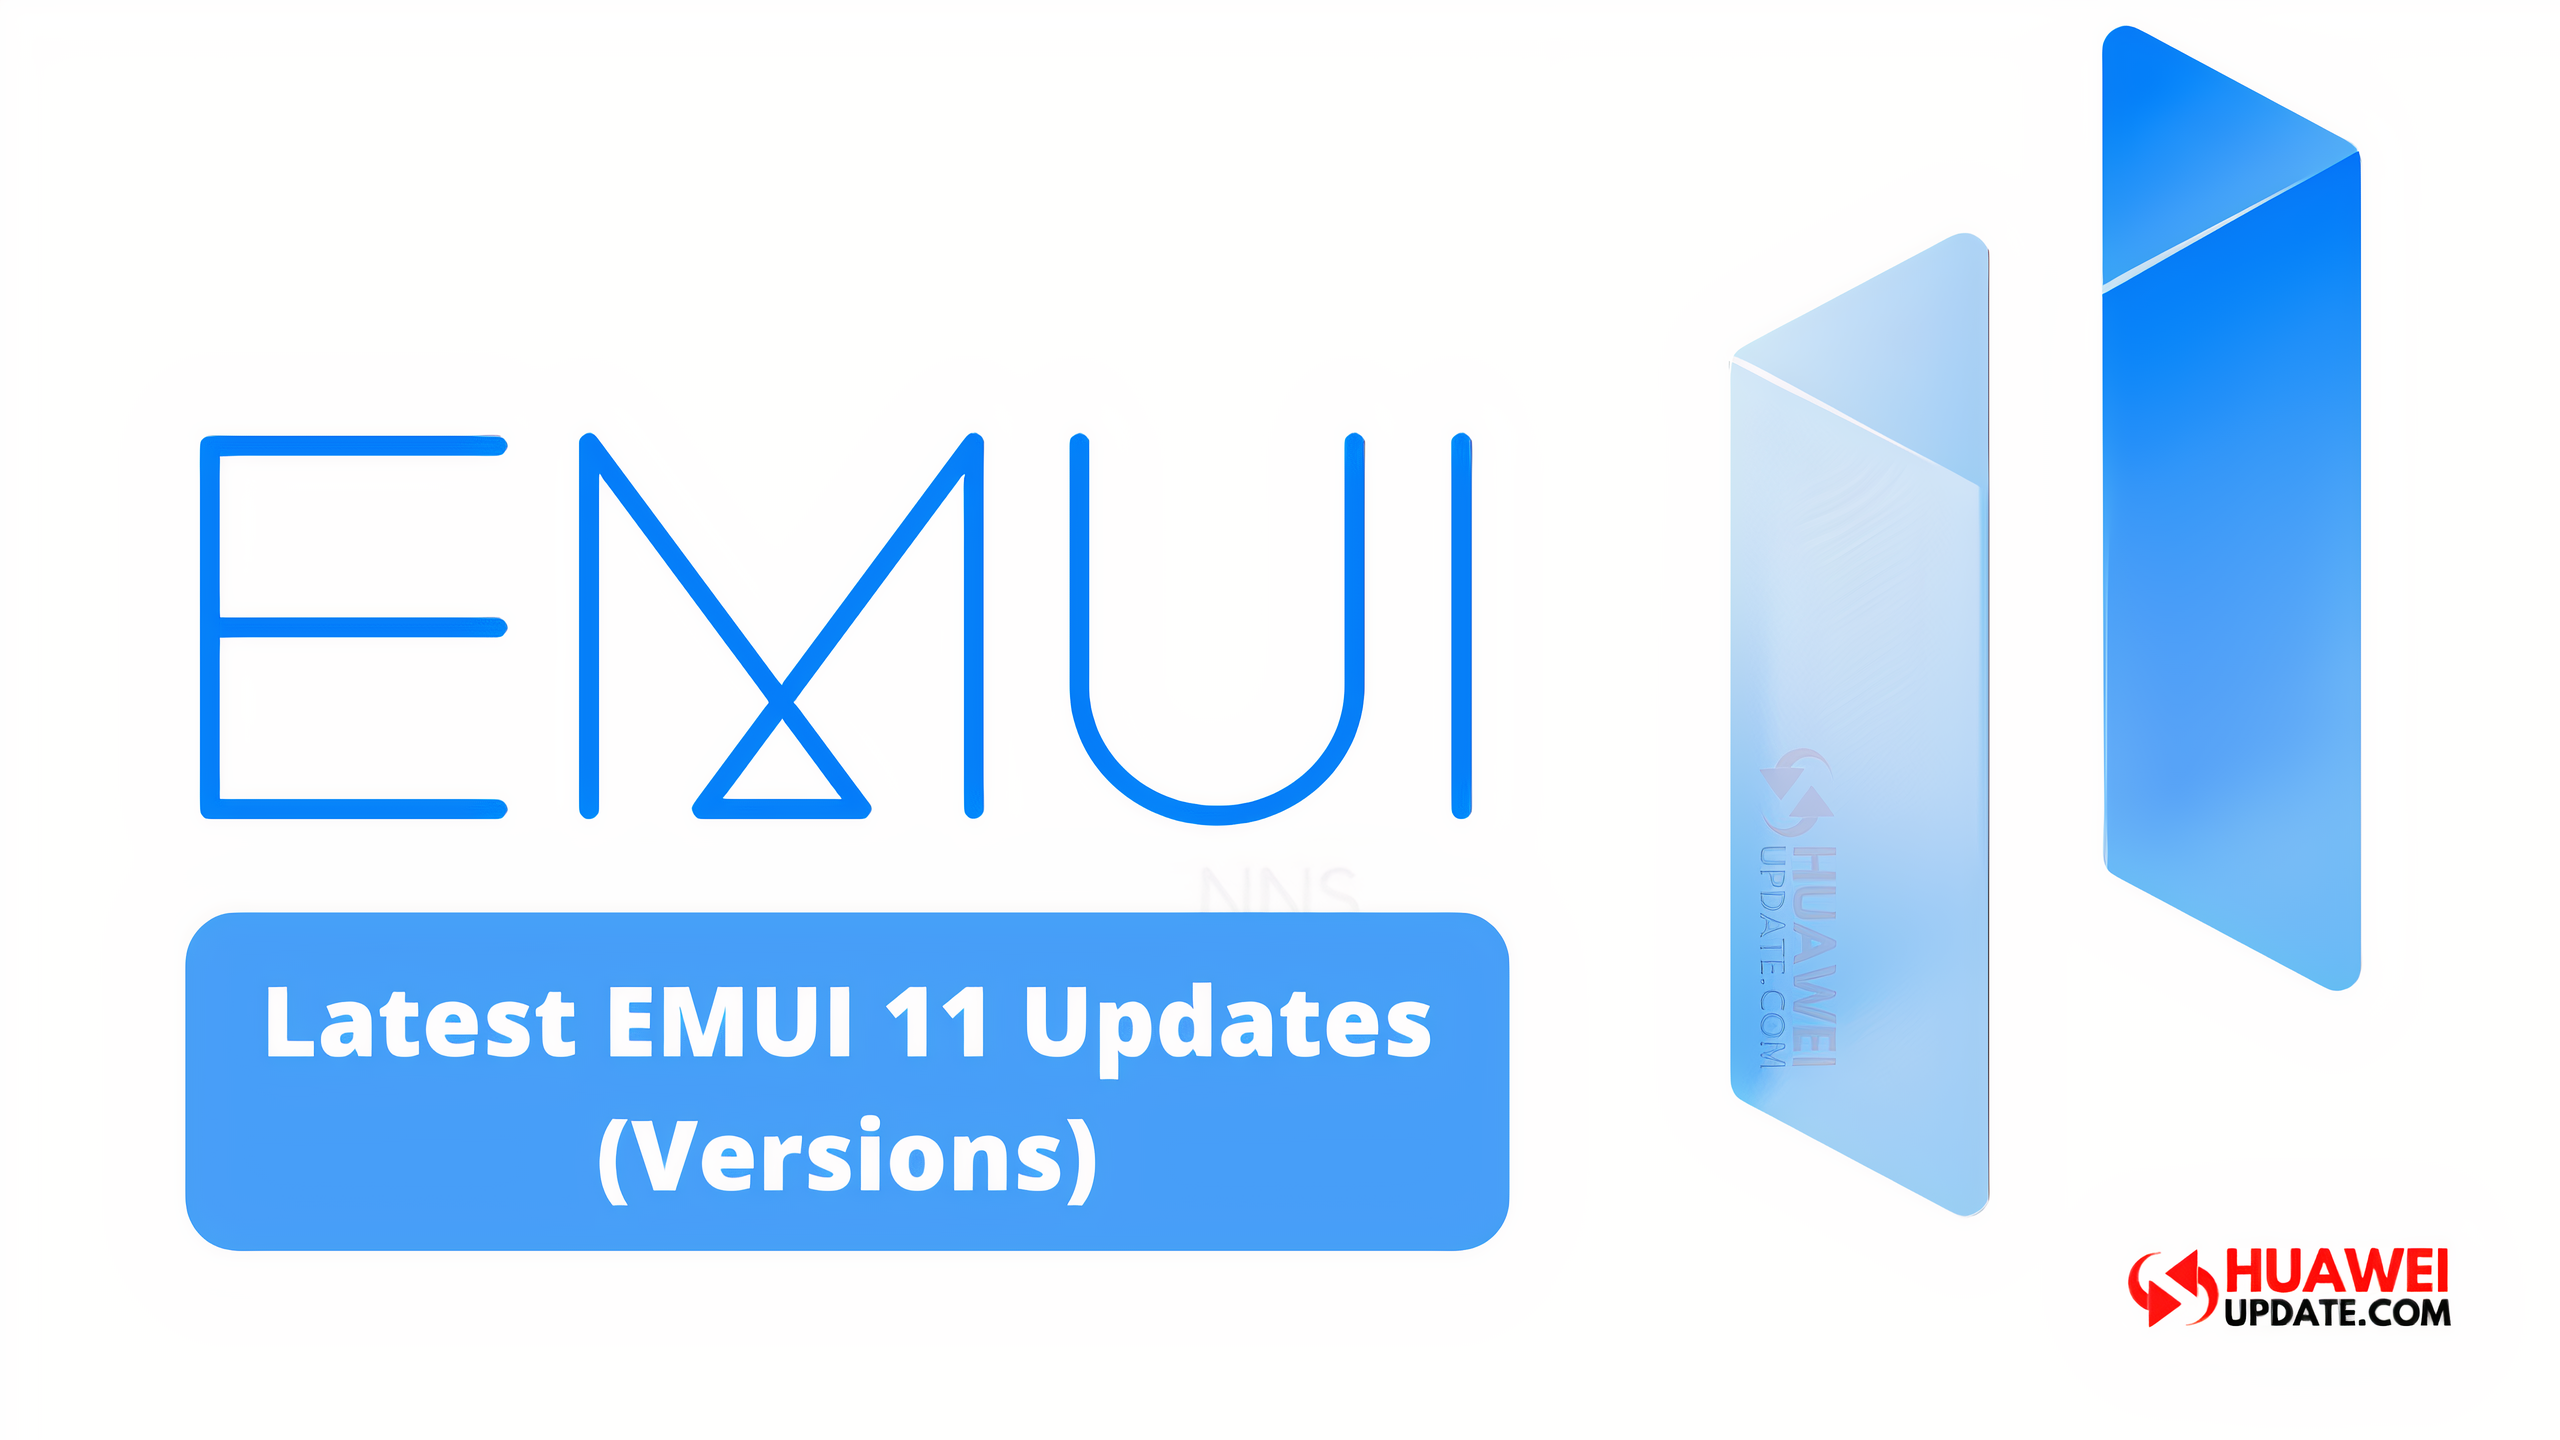 The Latest EMUI 11 Updates